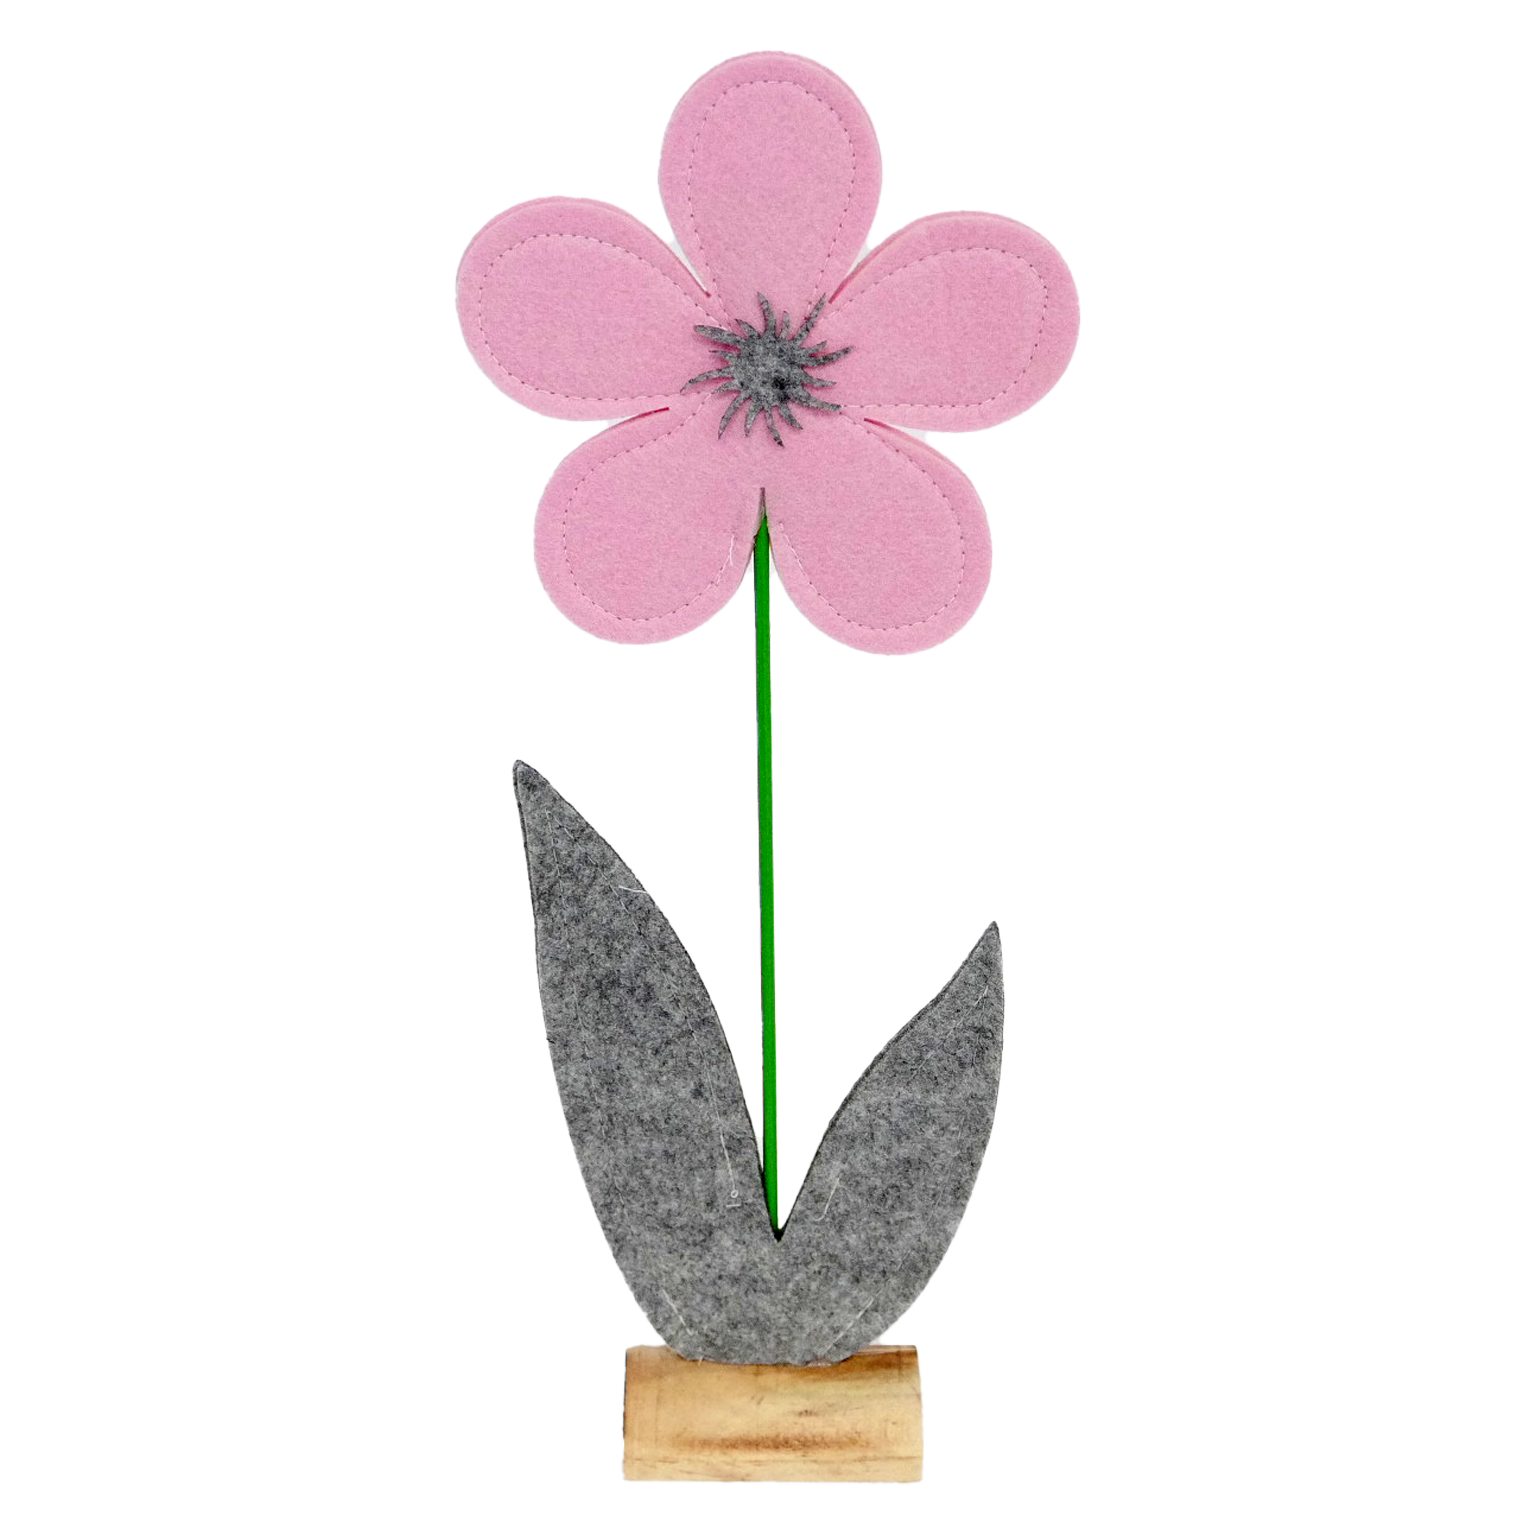 B&S Dekofigur Dekofigur Blume aus Filz rosa/grau auf Holzfuß 31 cm hoch